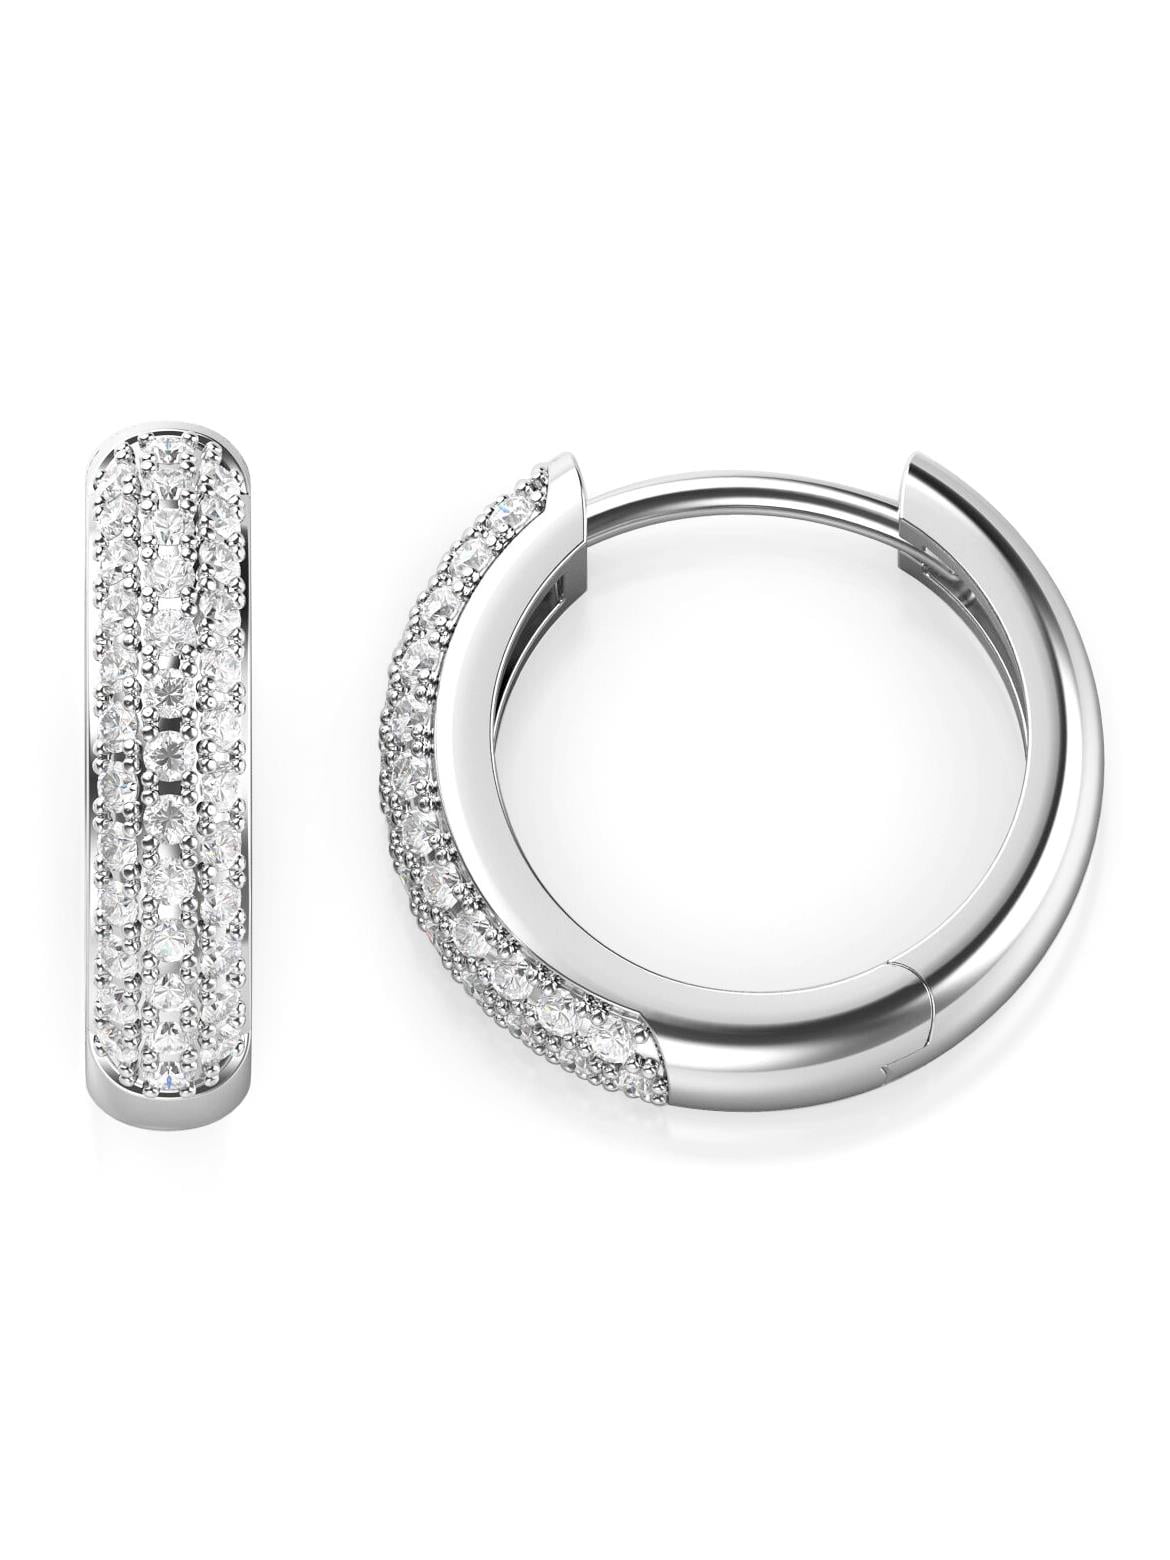 Andrea Jewelers - 925 Sterling Silver Pave Set CZ Cubic Zirconia Huggie Hoop Earrings